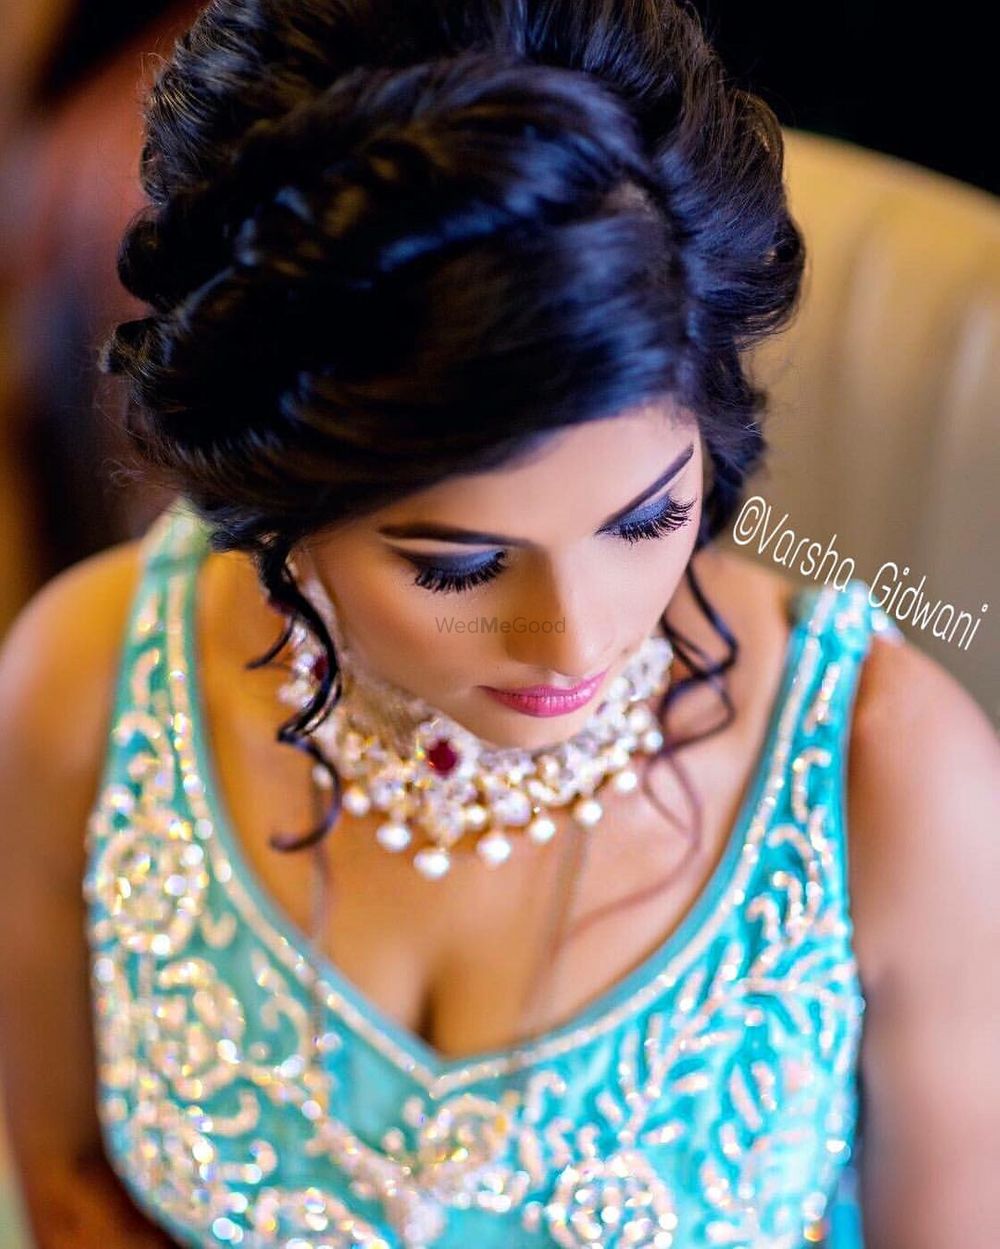 Photo From Brides - By Varsha Gidwani